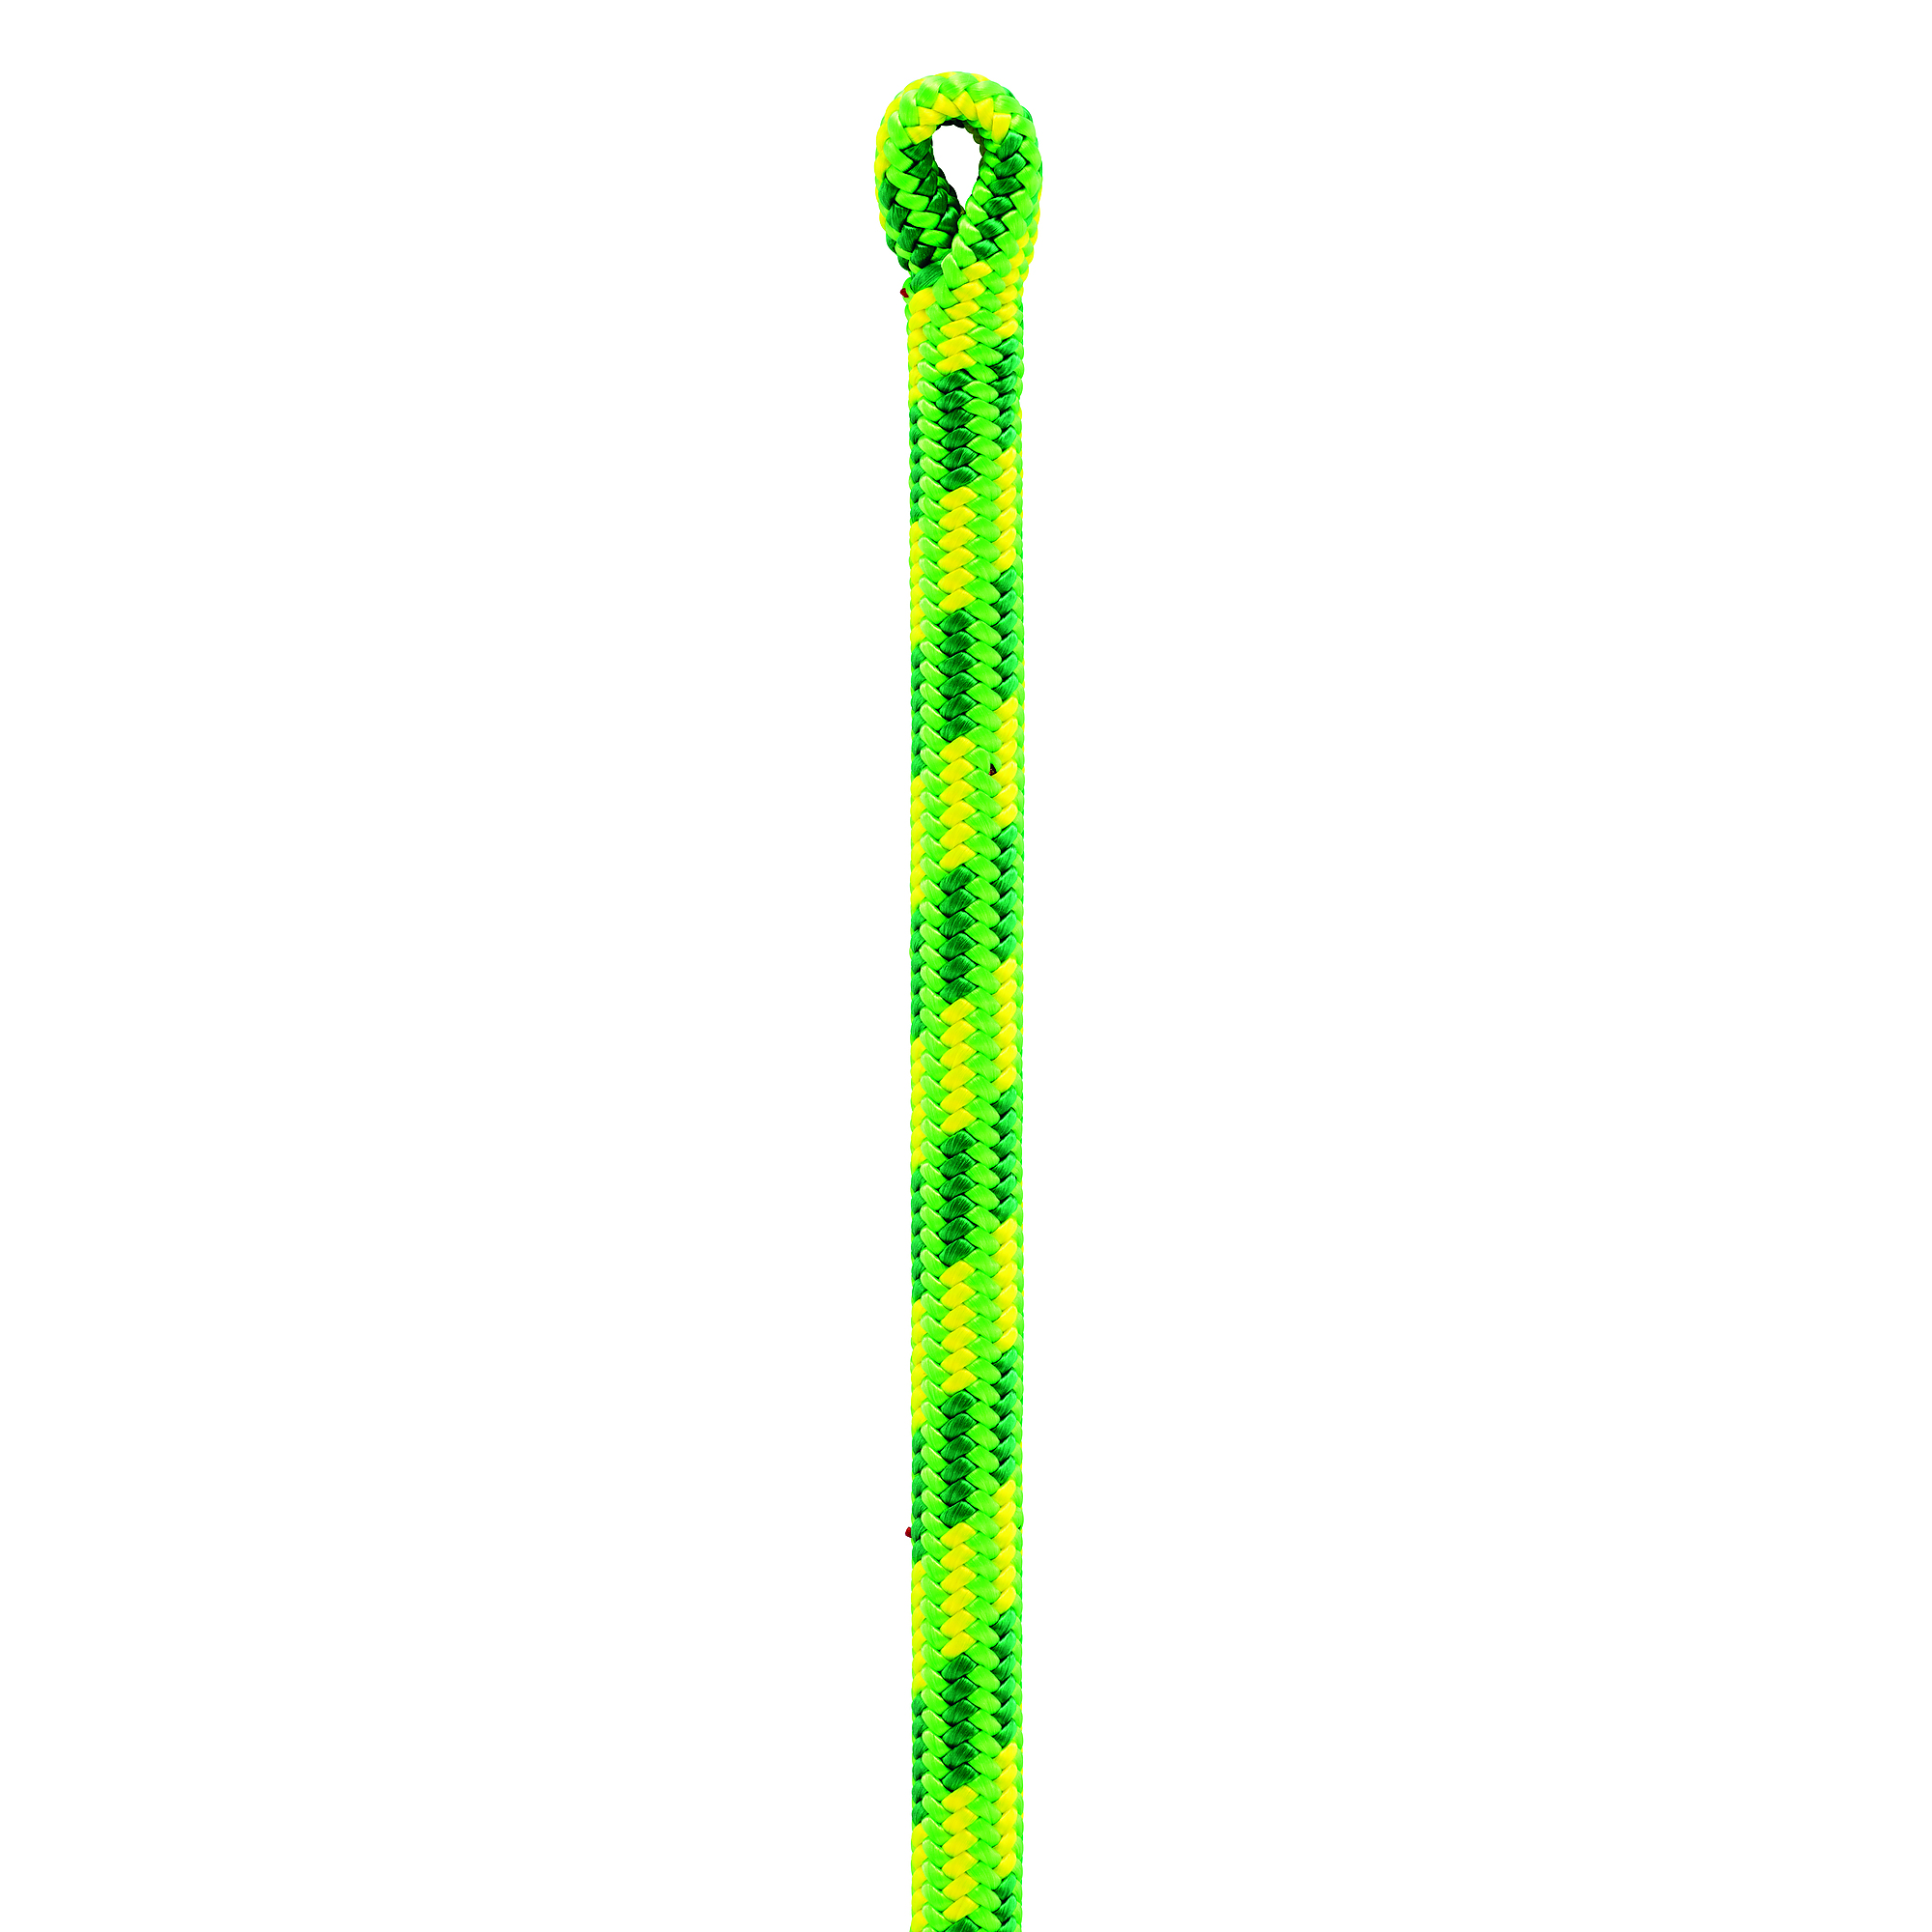 Petzl, CONTROL tree care rope 12.5mm 148ft. 1splice green, Model R080AA02